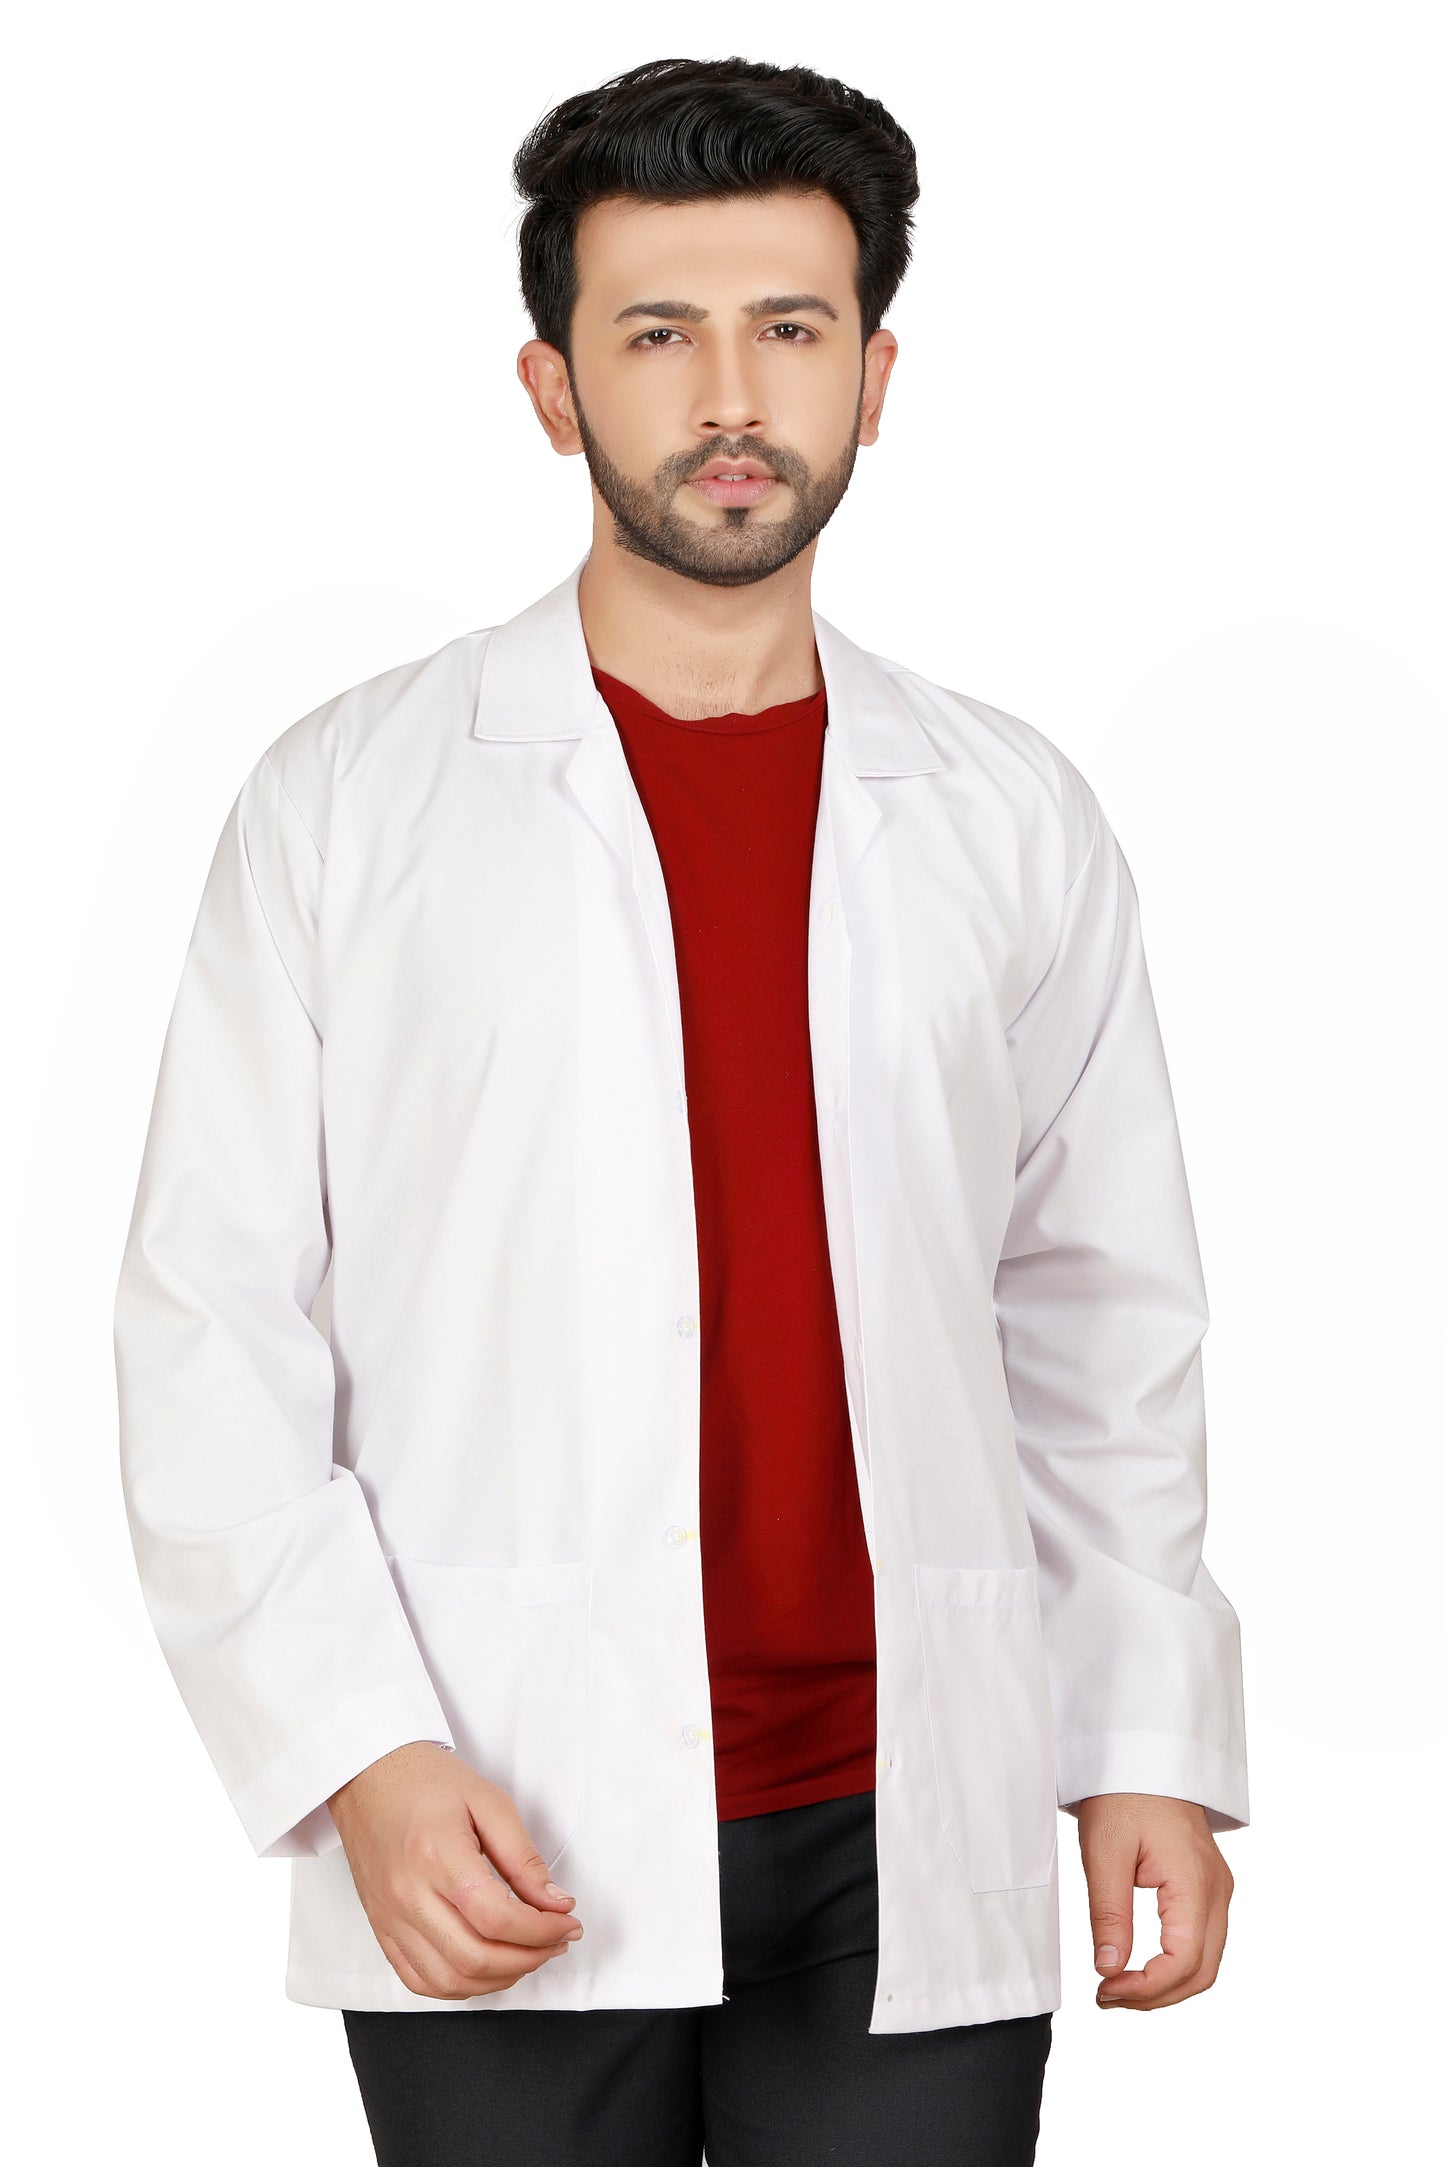 Cotton Unisex Apron Lab Coat - Regular Length - Full Sleeves - White